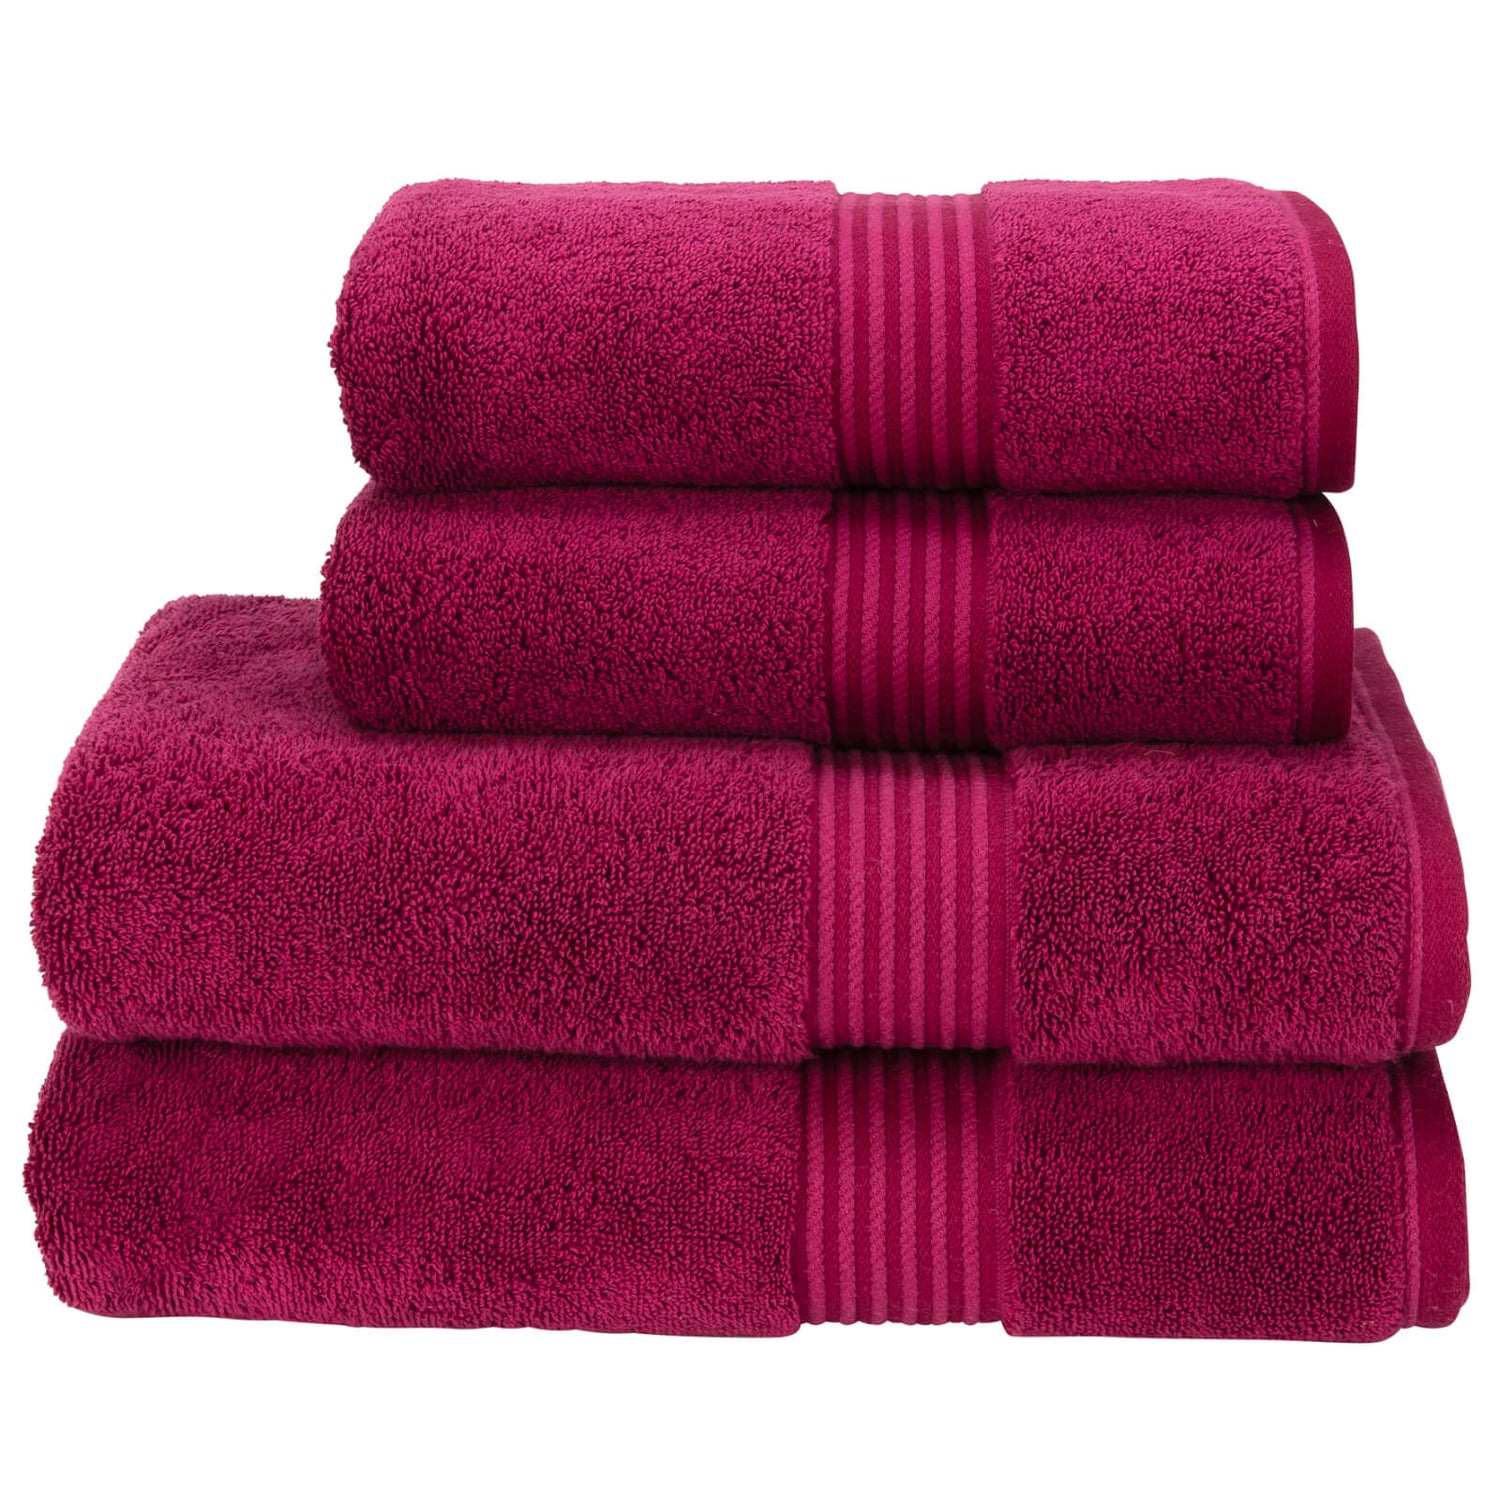 Christy Supreme Hygro Towel Range - Raspberry - Bath Towel (Set of 2)